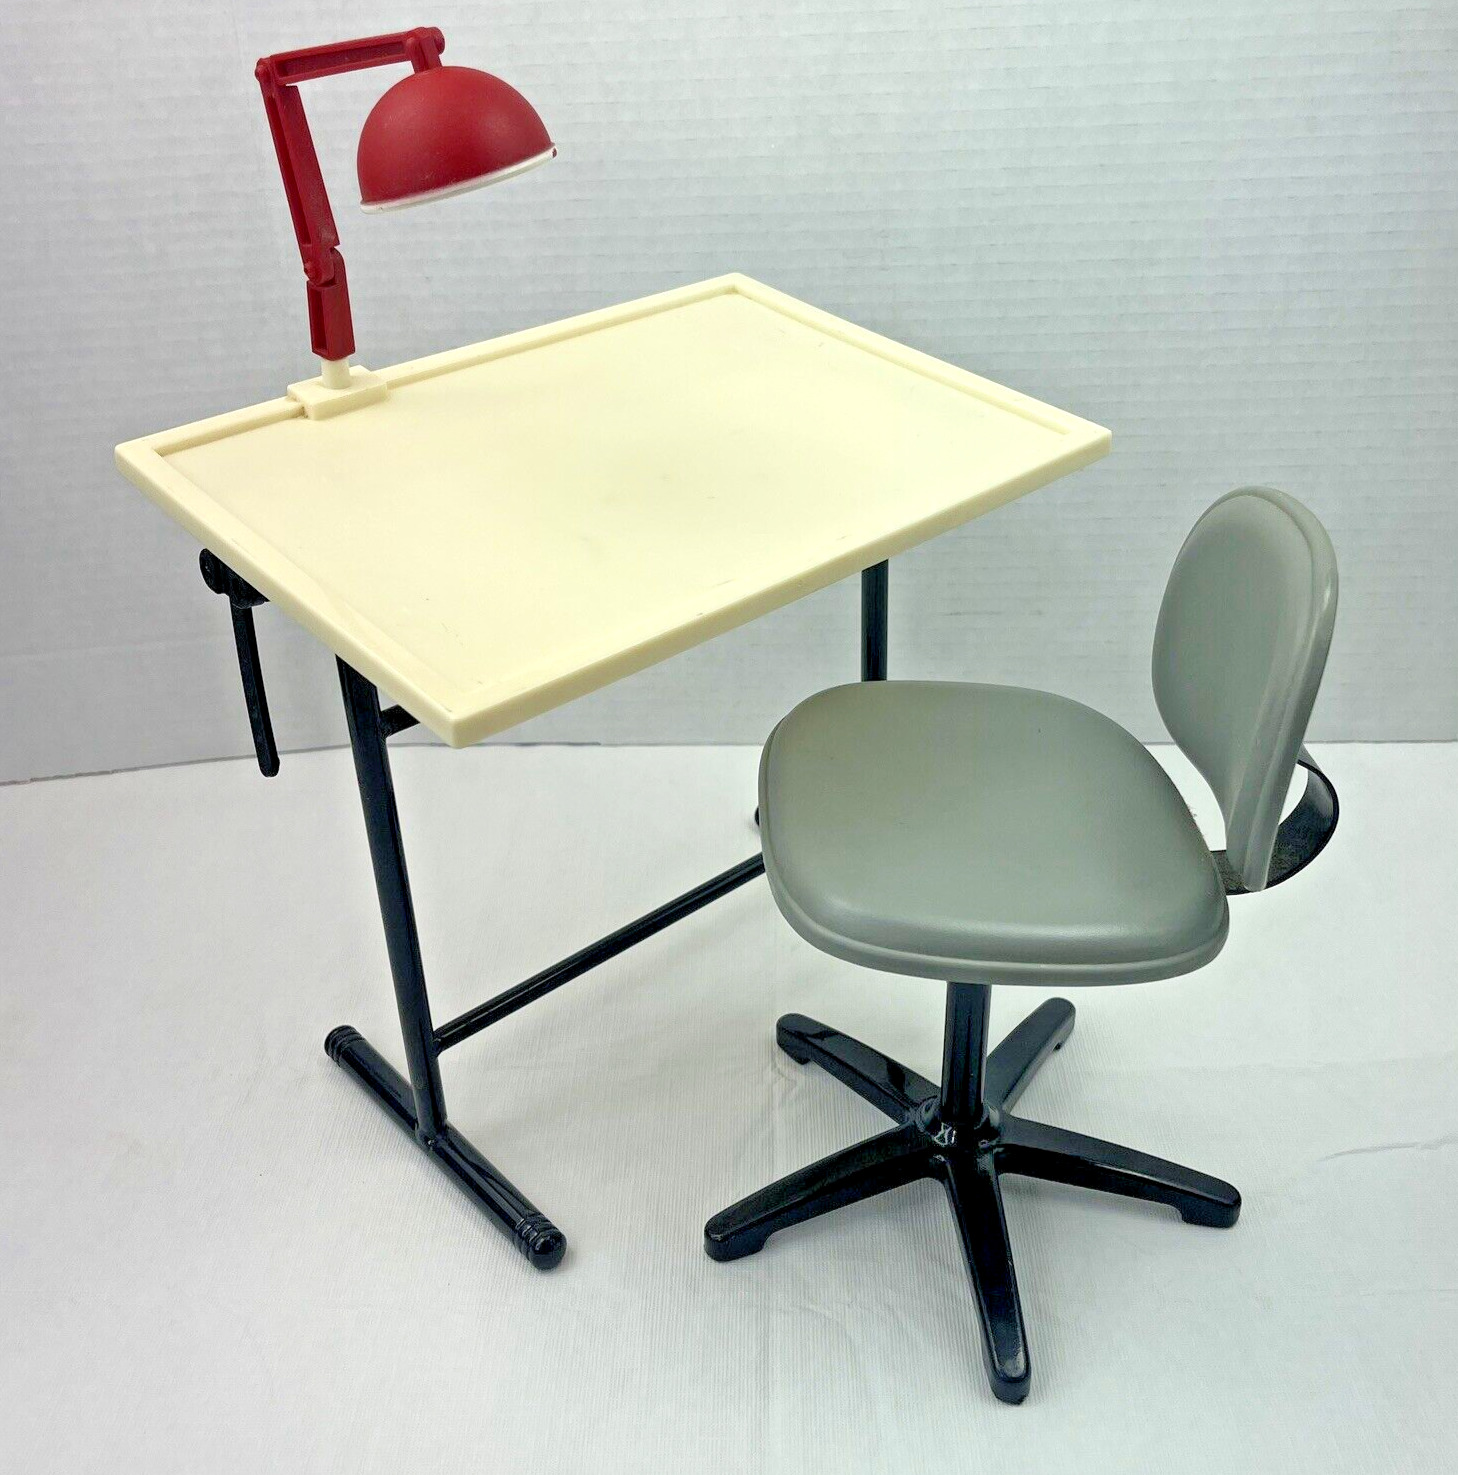 Vintage Store Display 1:3 Scale Drafting Table & Chair Salesman Sample Furniture